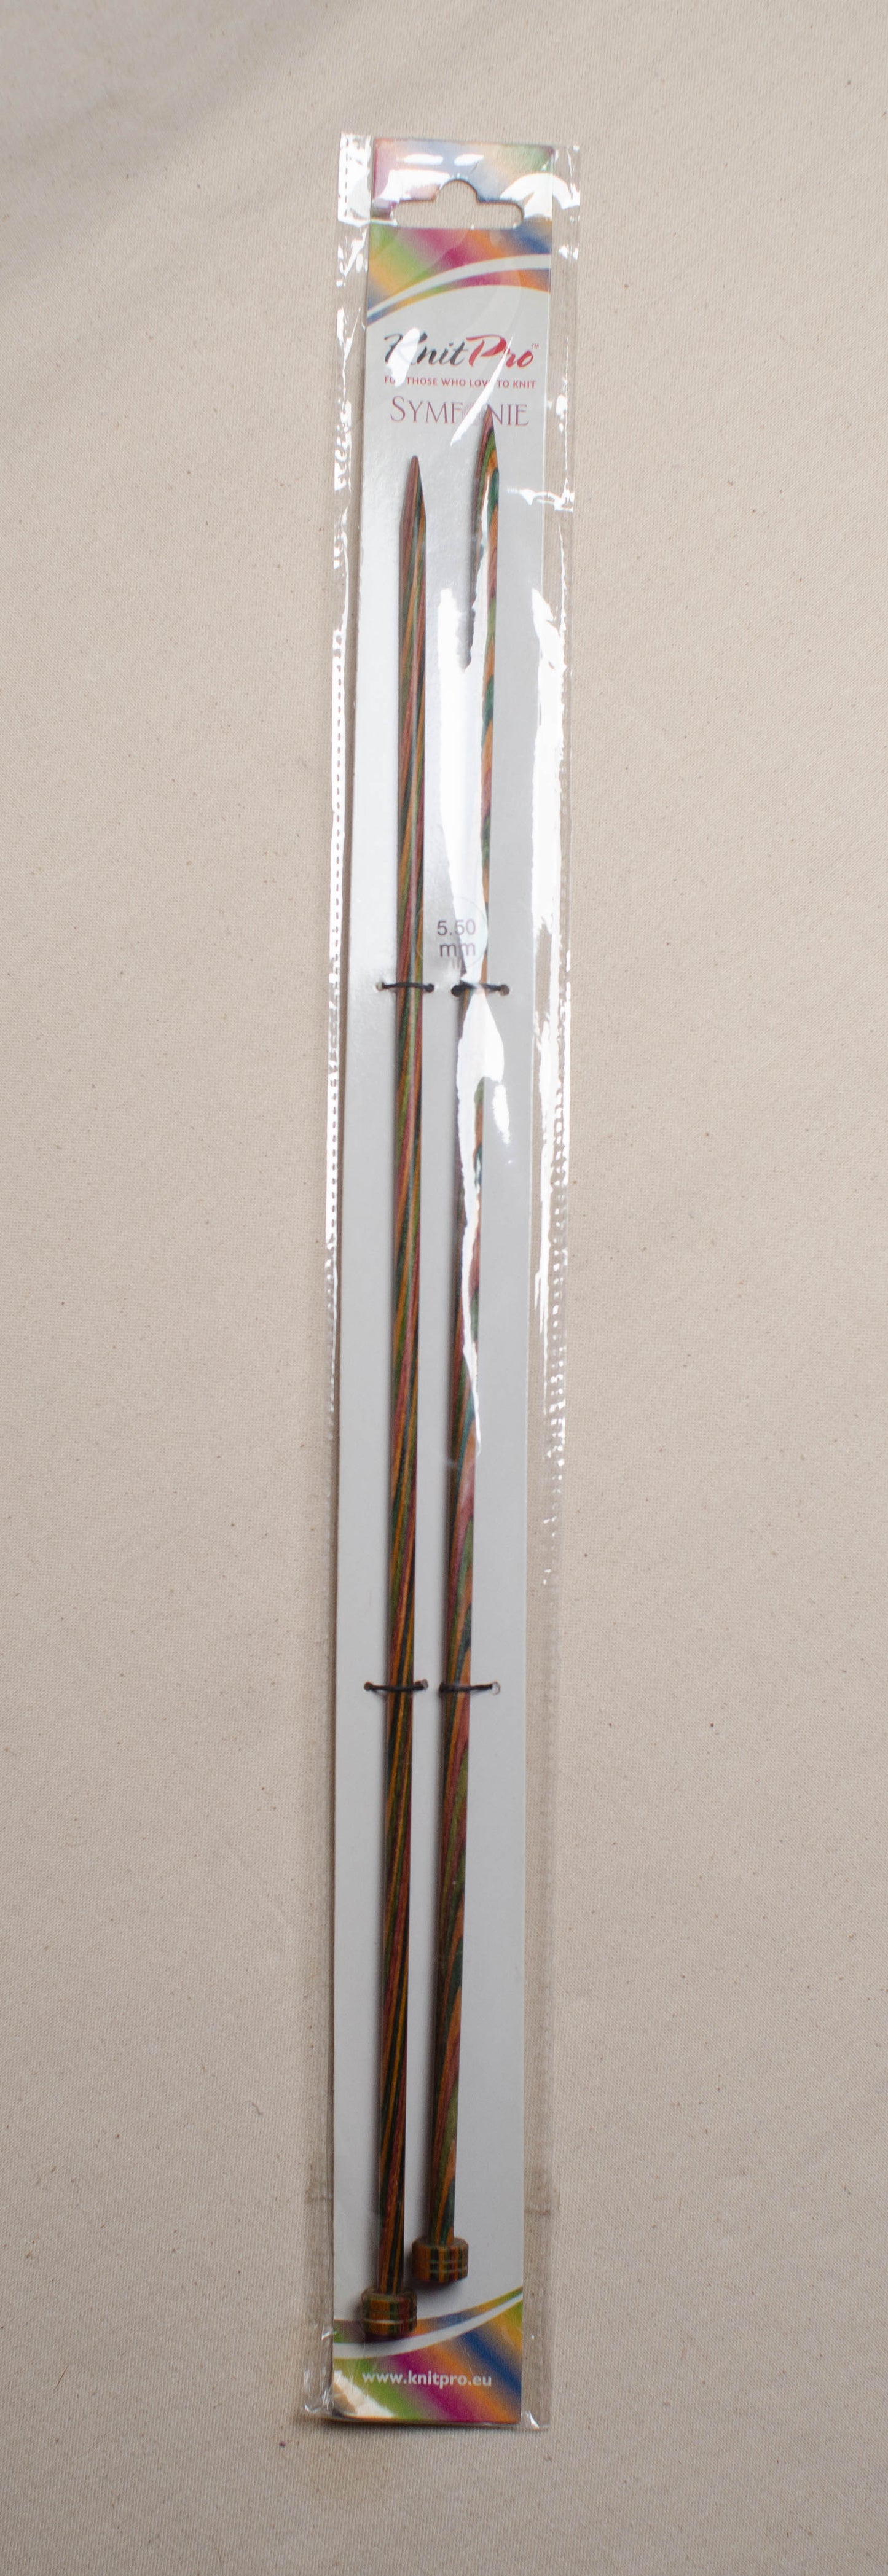 KnitPro 40 cm x 5.50 mm Symfonie Single Pointed Needles, Multi-Color